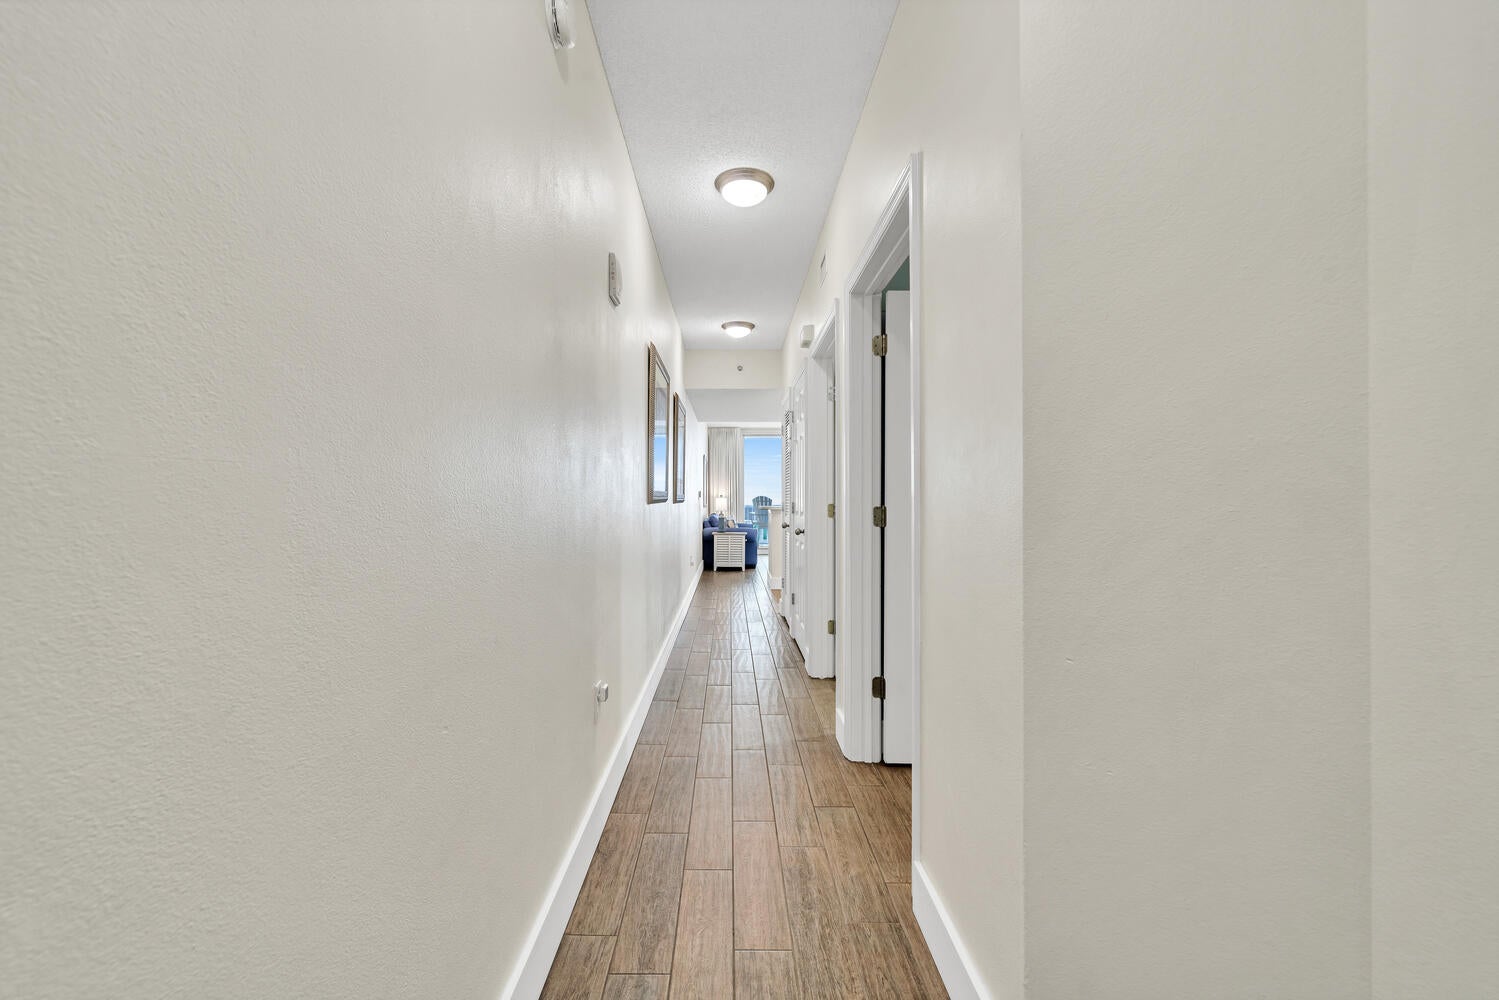 Hallway to guest rooms